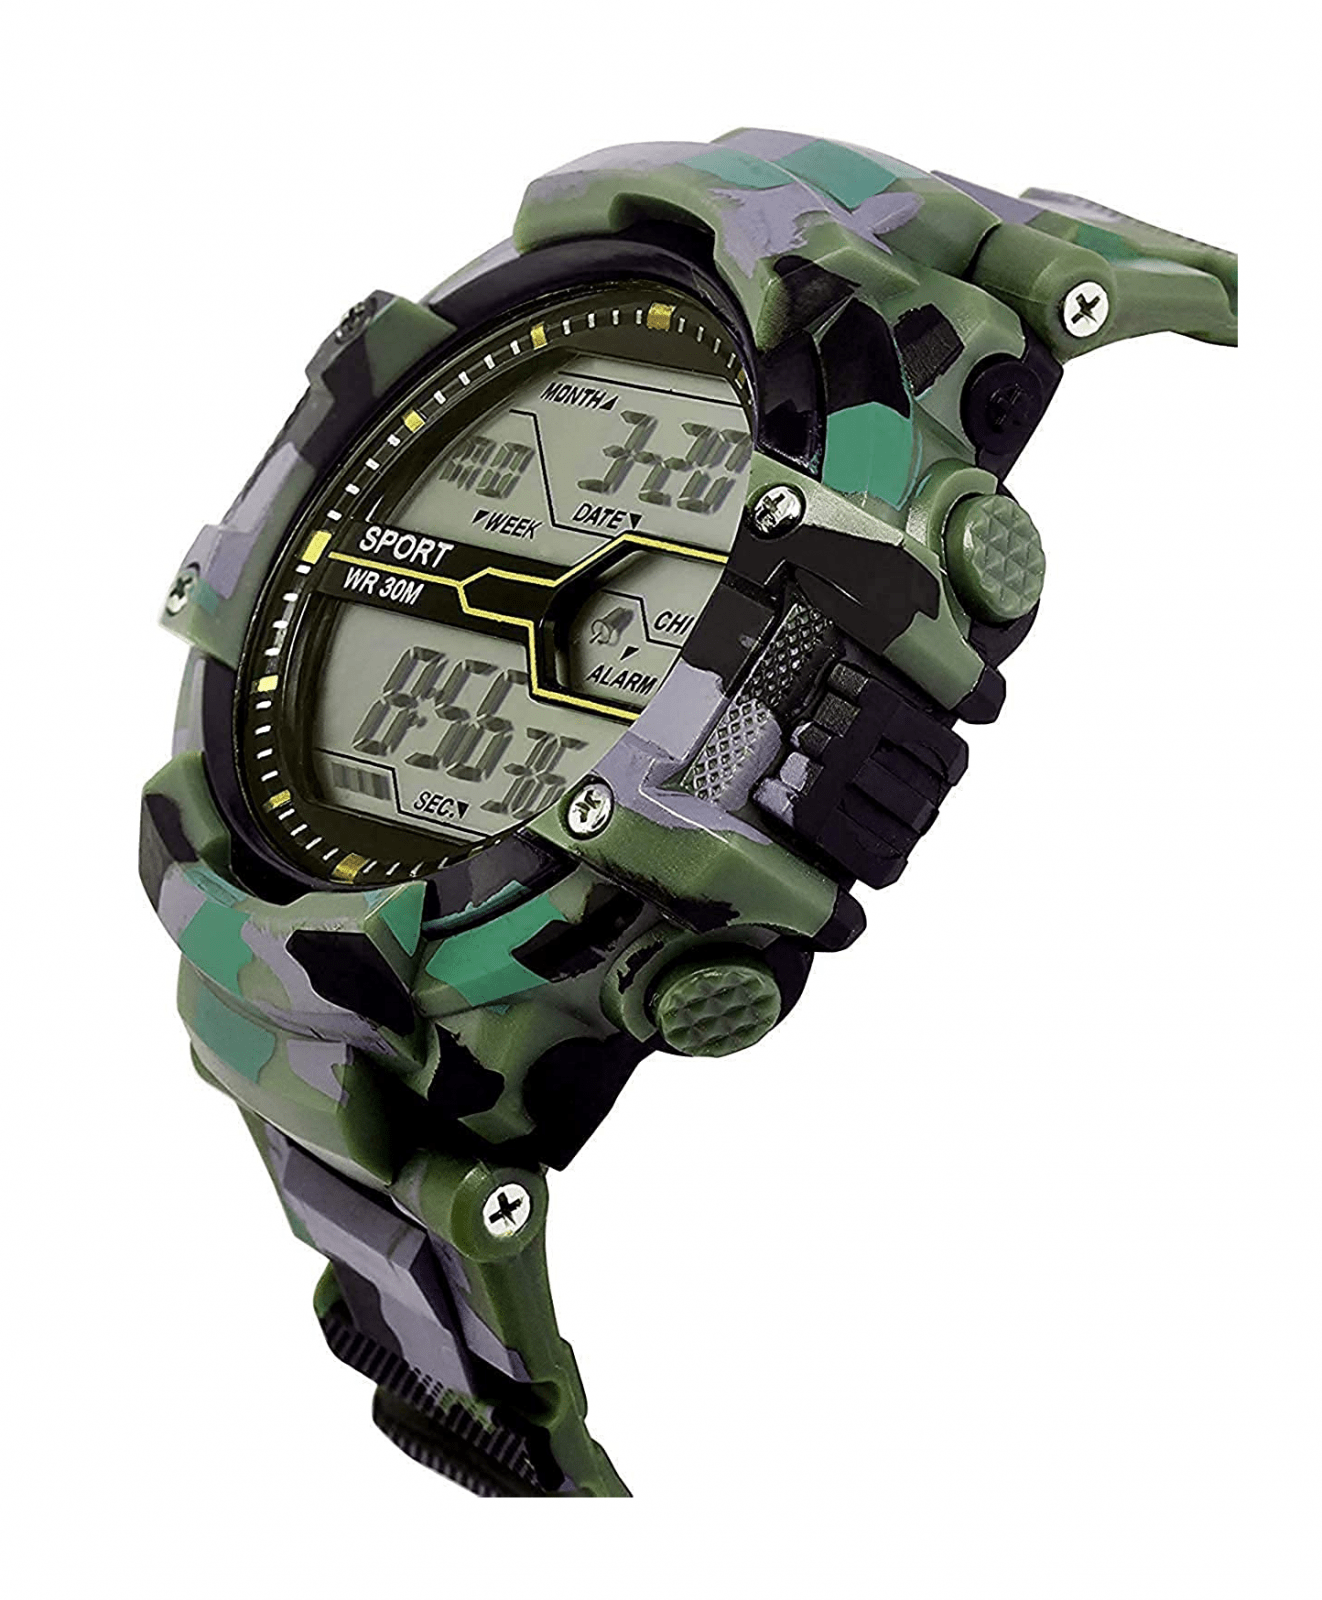 Reloj Deportivo Digital Multiuso Army Camuflado RLJ3